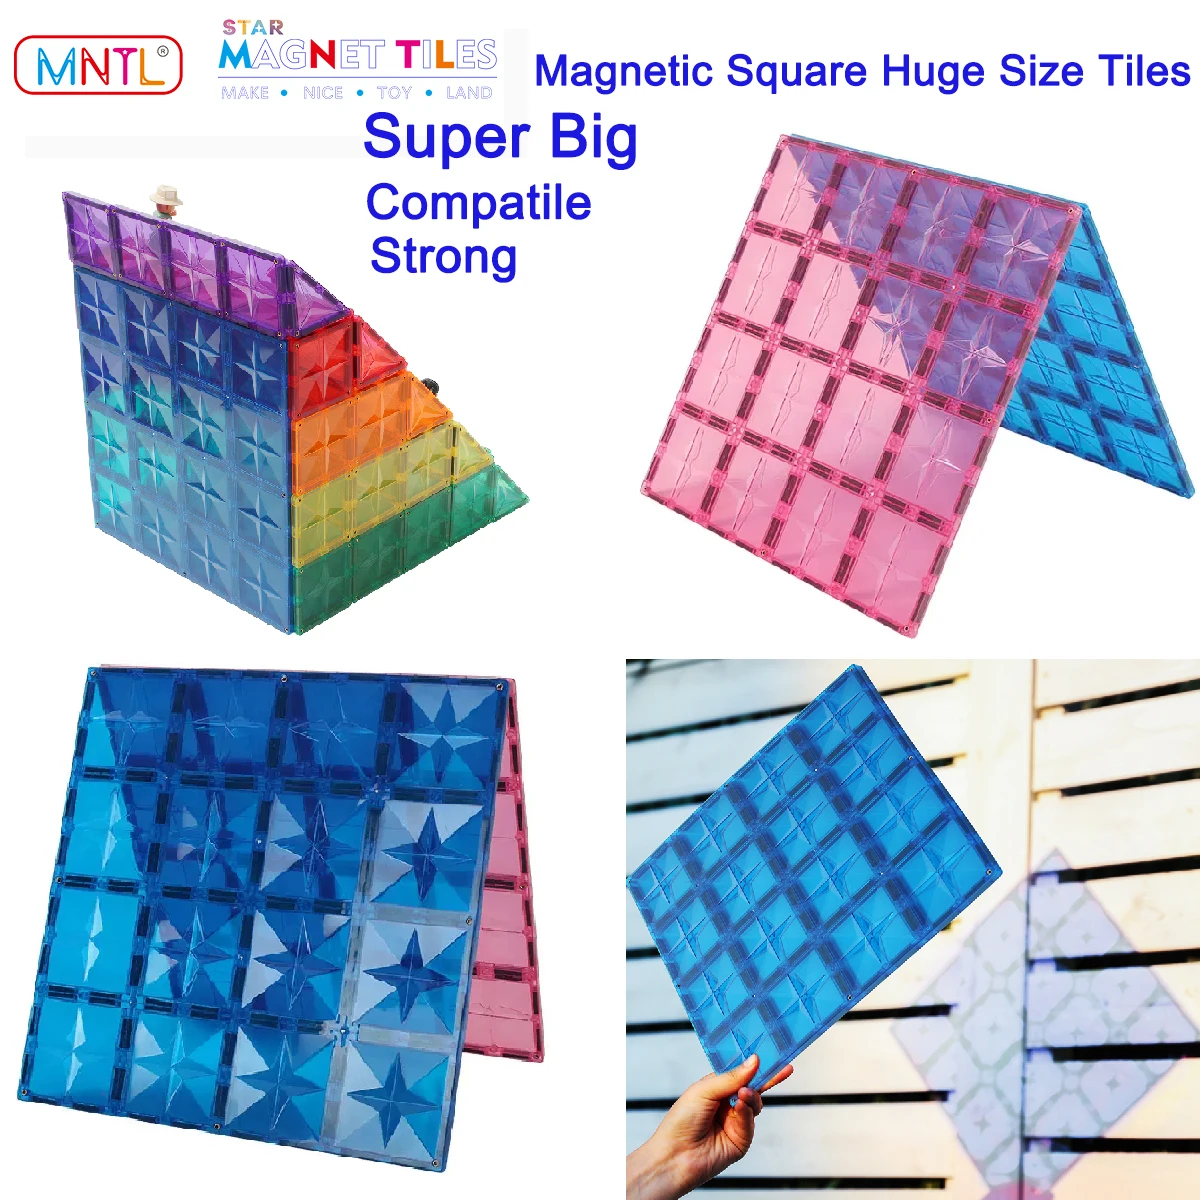 https://ae01.alicdn.com/kf/Sdcac397f9804471b85120fa591a4af3dd/MNTL-2Pcs-Magnetic-Blocks-Big-Size-Building-Toys-Construction-Compatible-Brand-Magnet-Tiles-Super-Large-Square.jpg